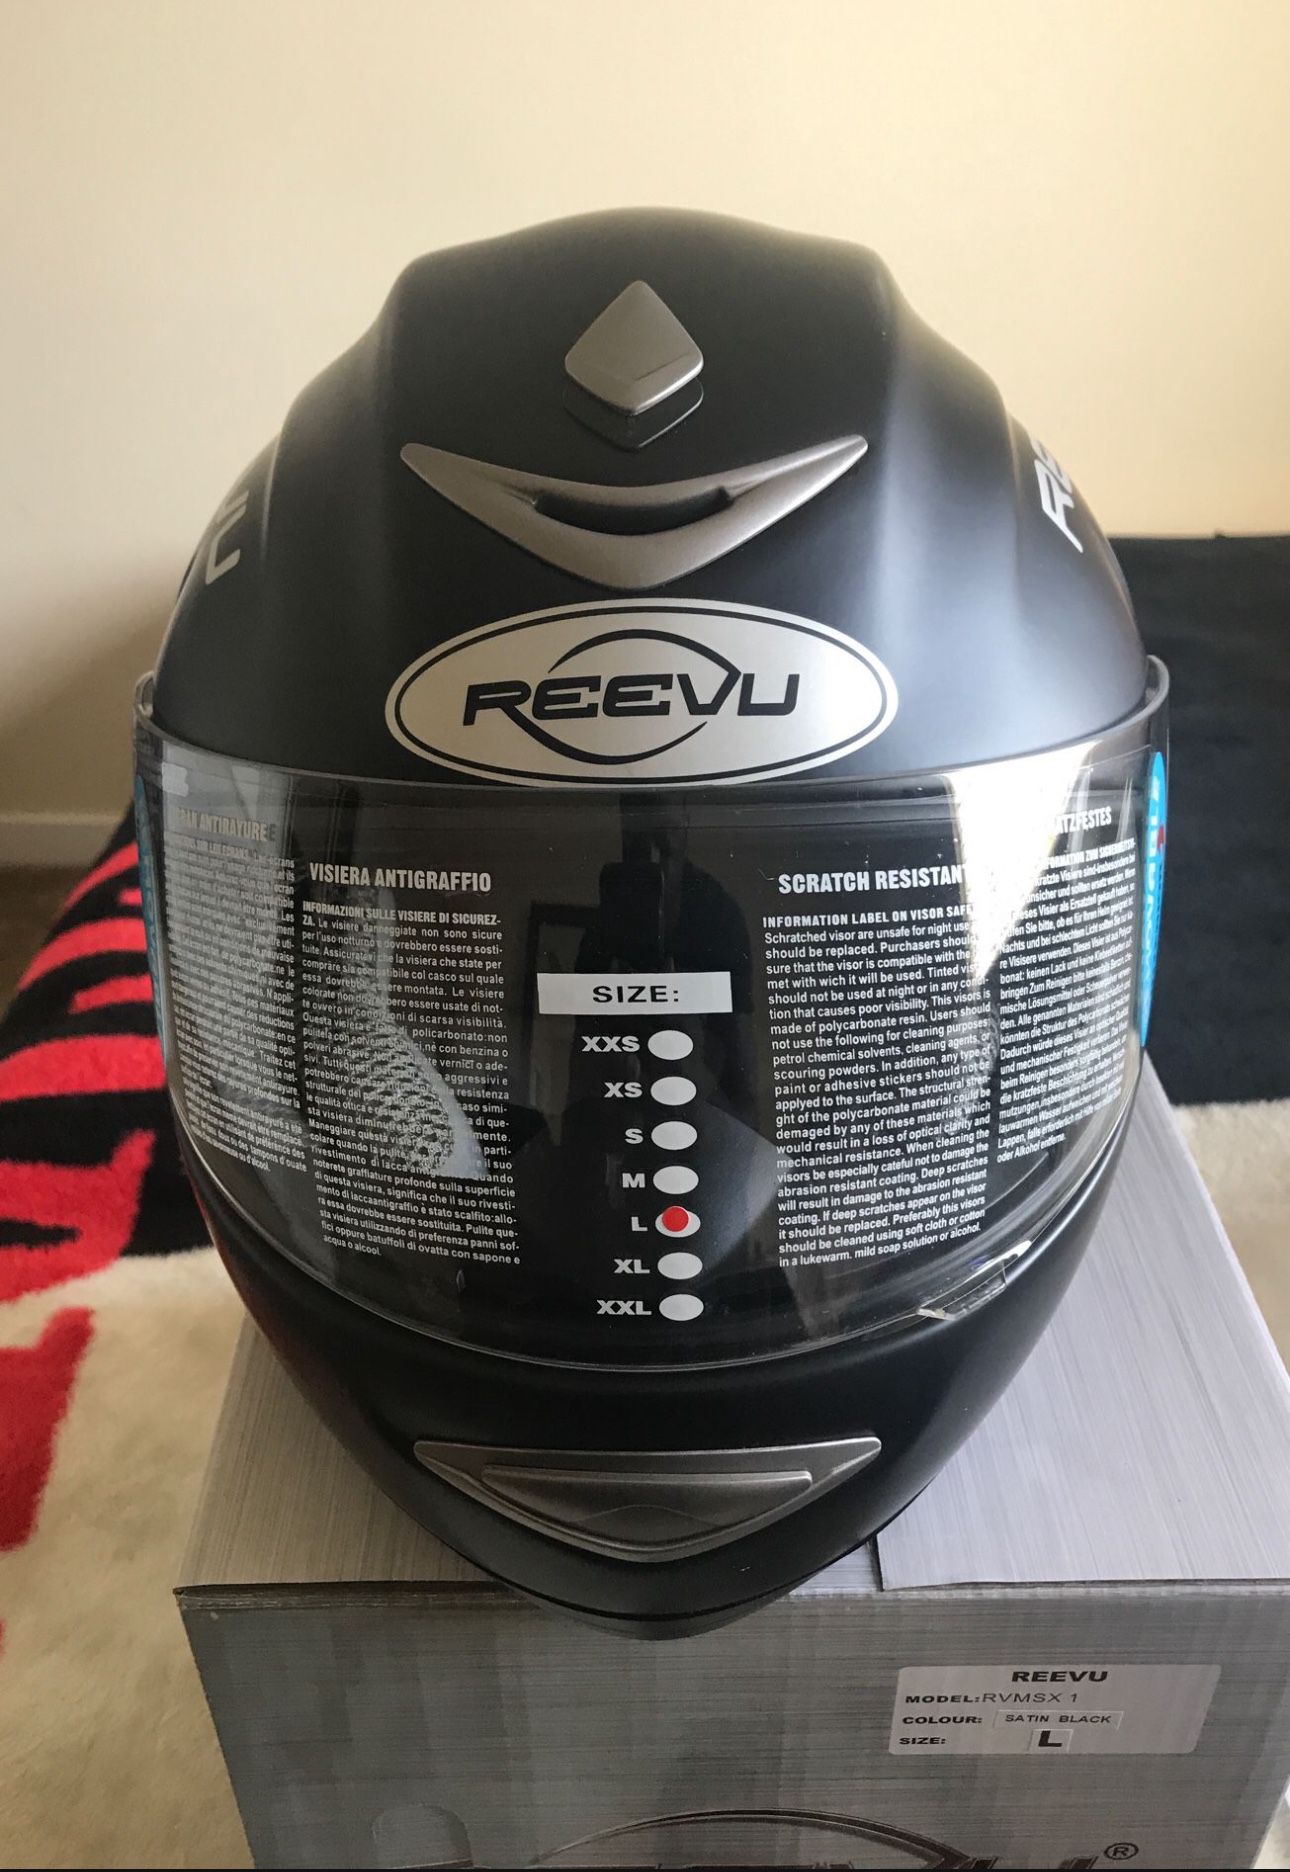 REEVU MSX1 rear view helmet Large